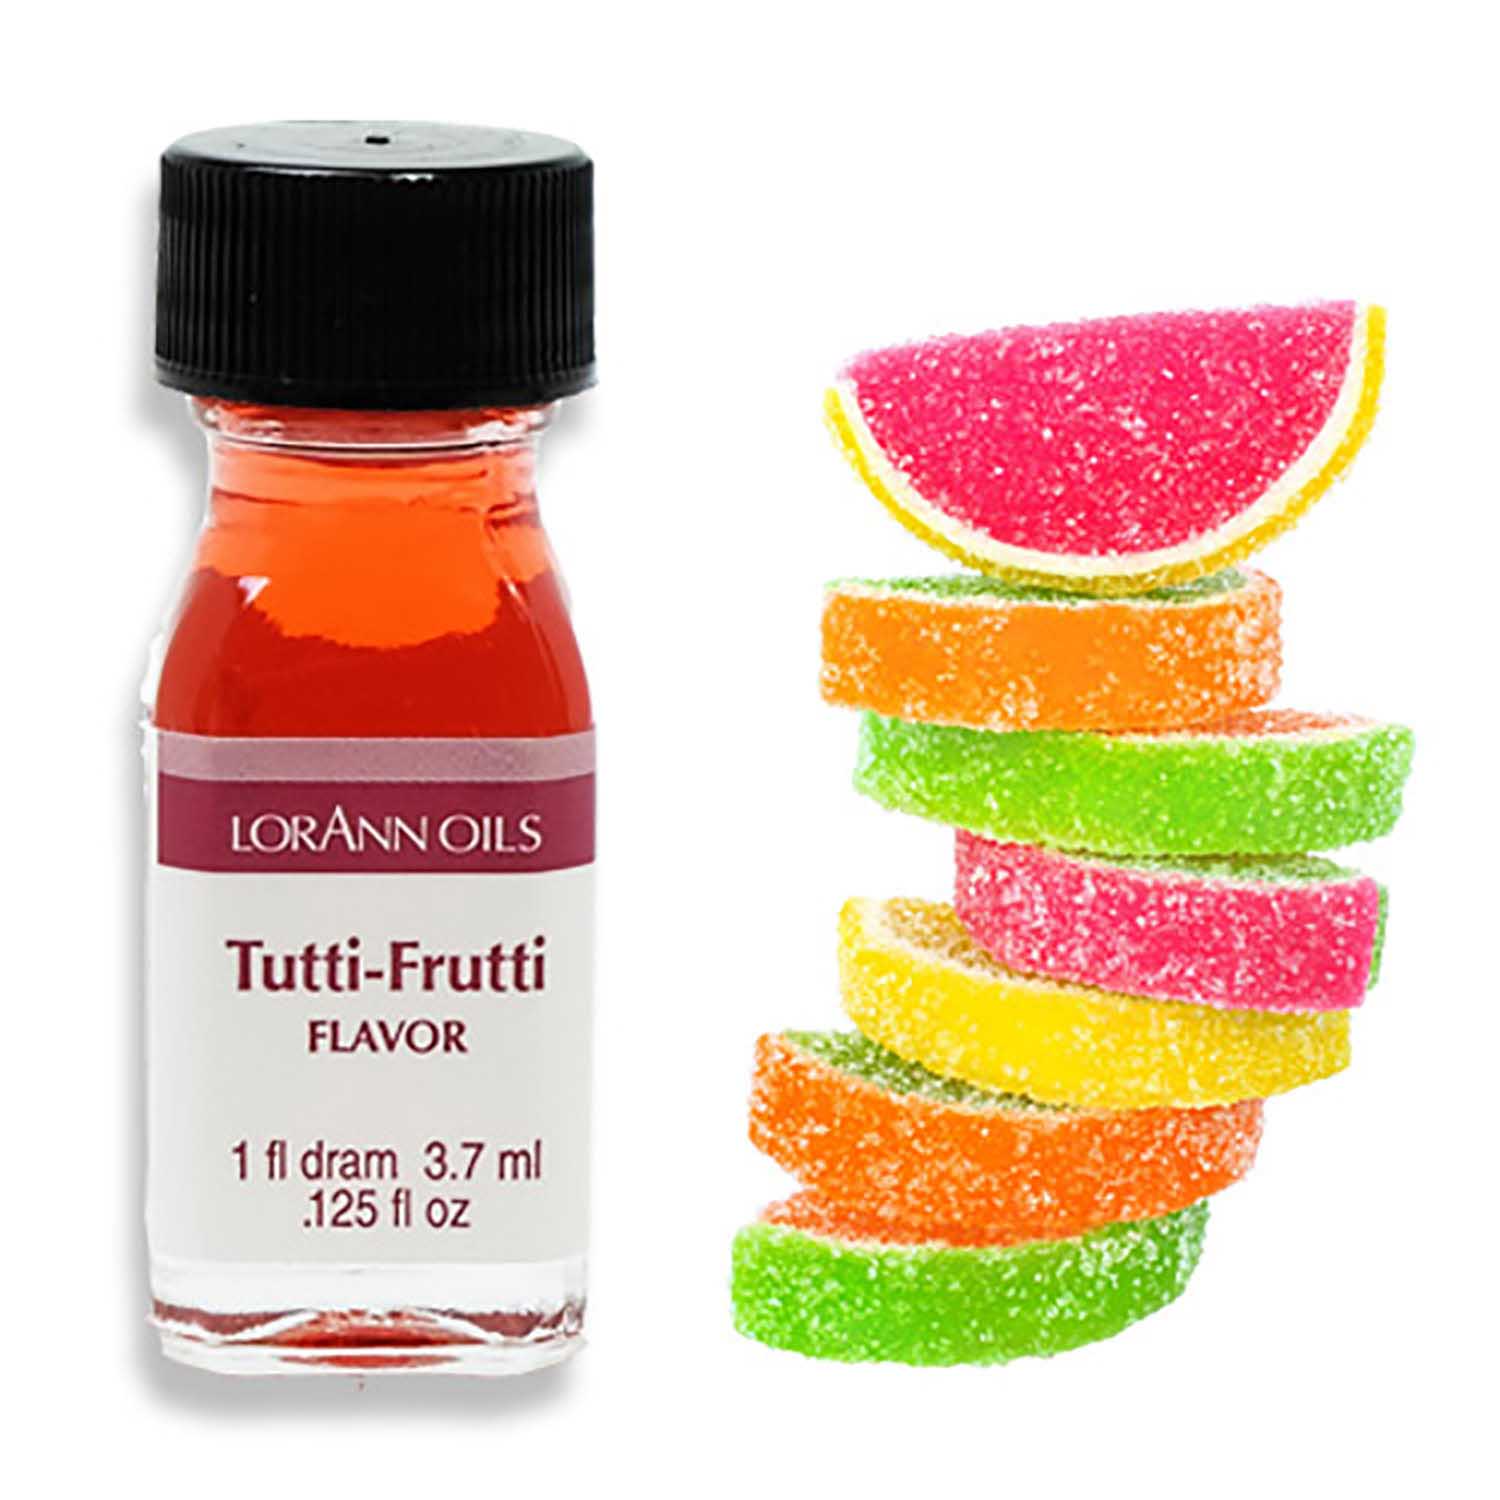 Tutti-Frutti Super-Strength Flavor